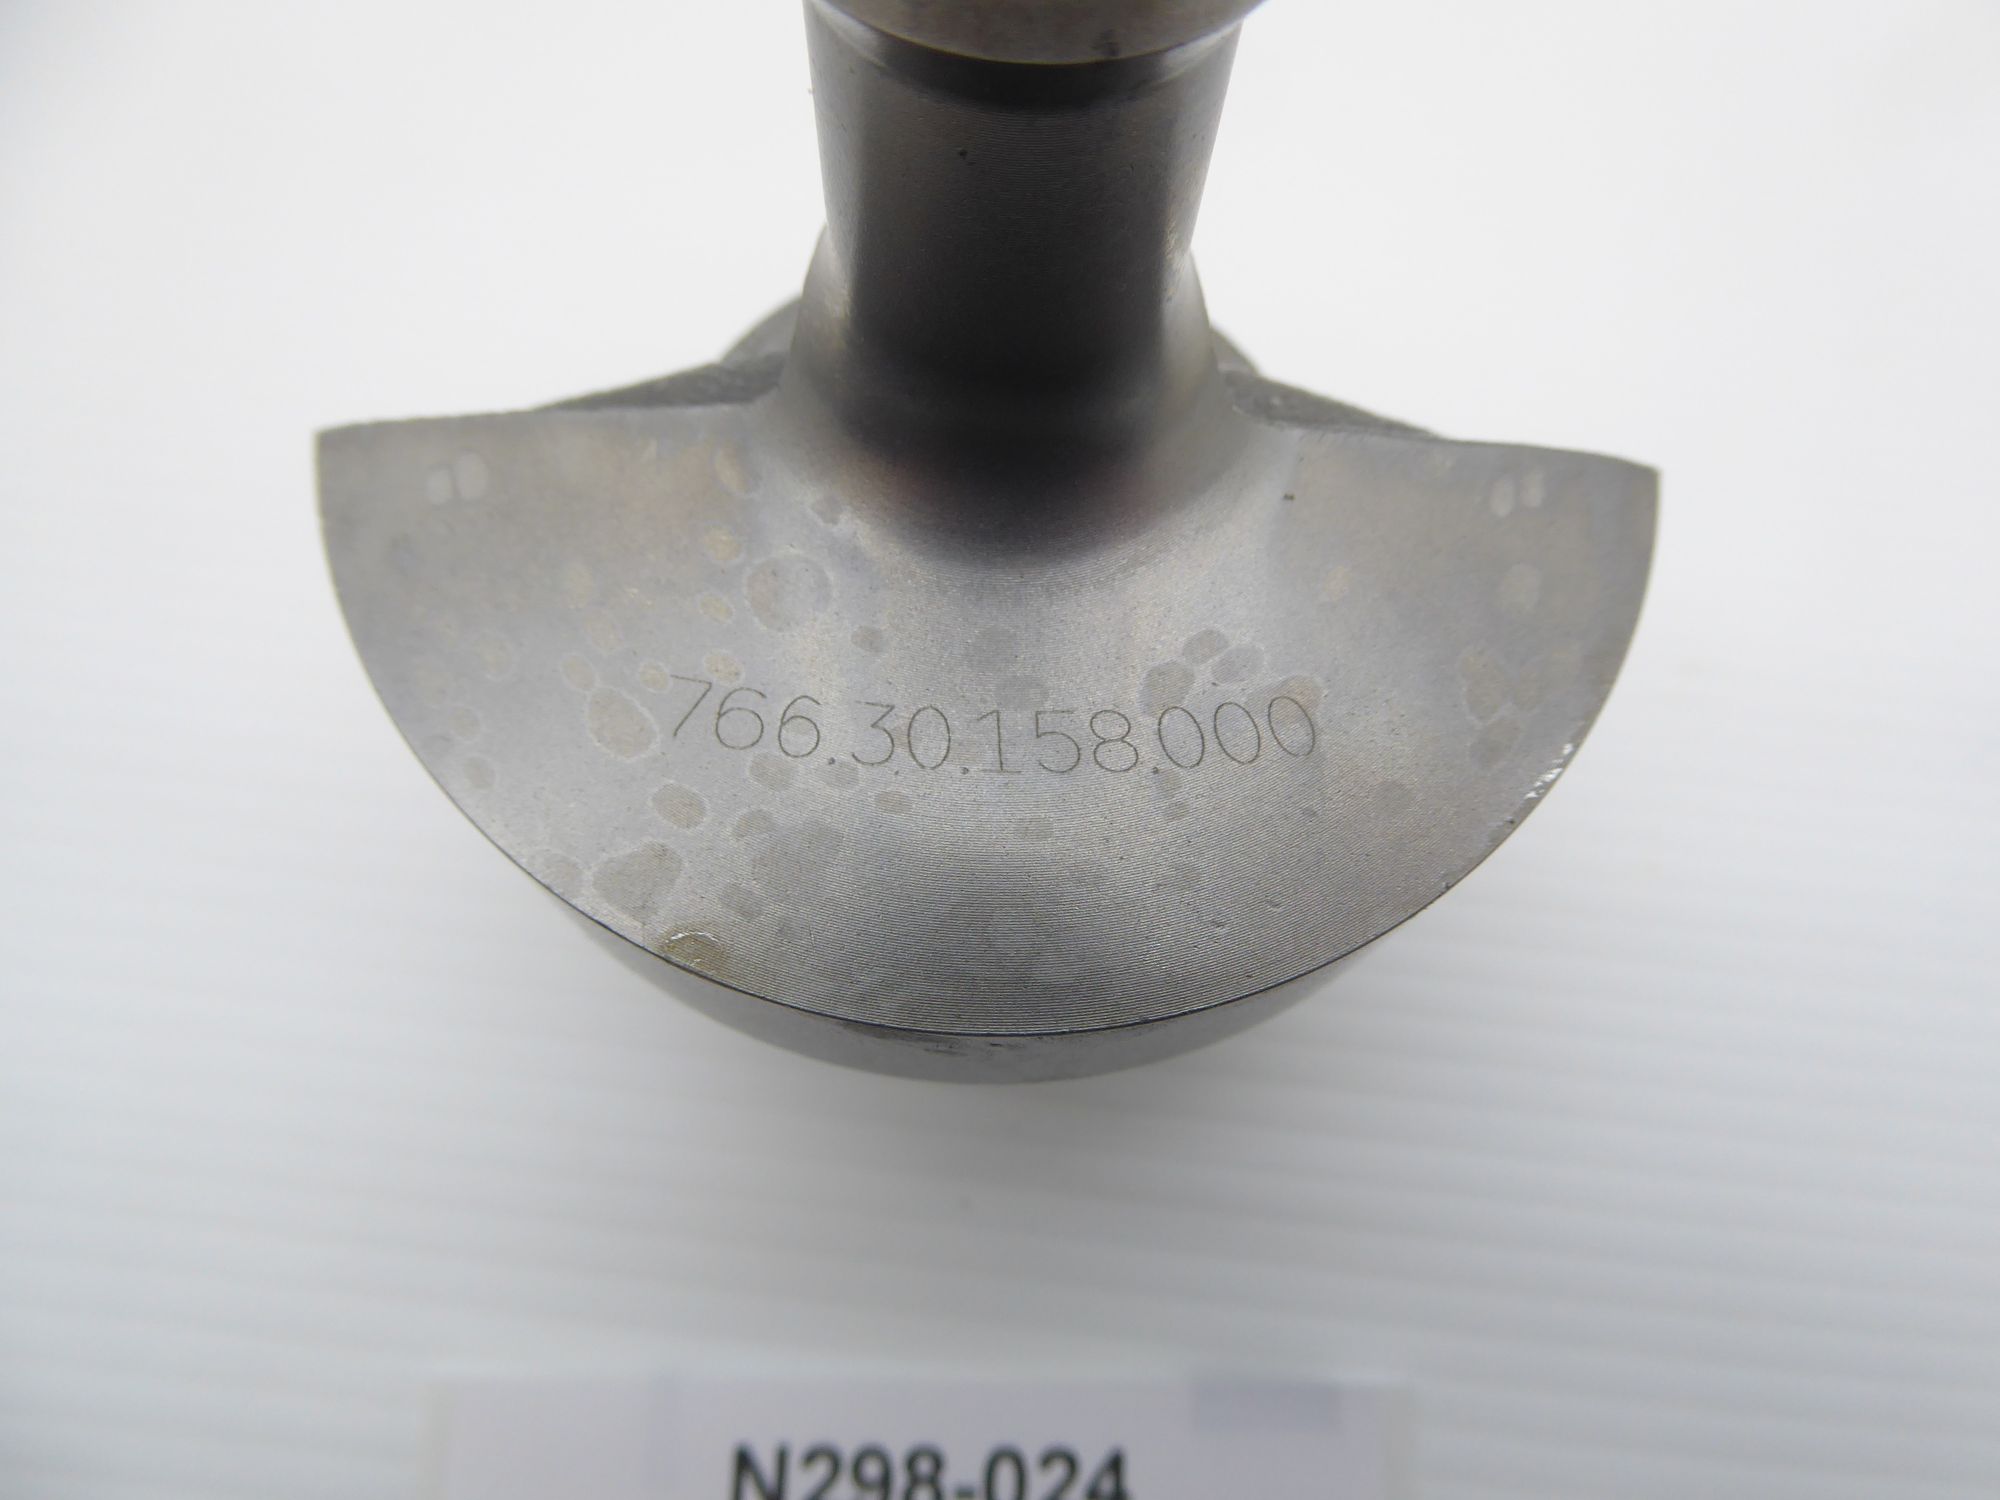 Husqvarna 701 Enduro 2017 balancer shaft cylinder head 76630158000